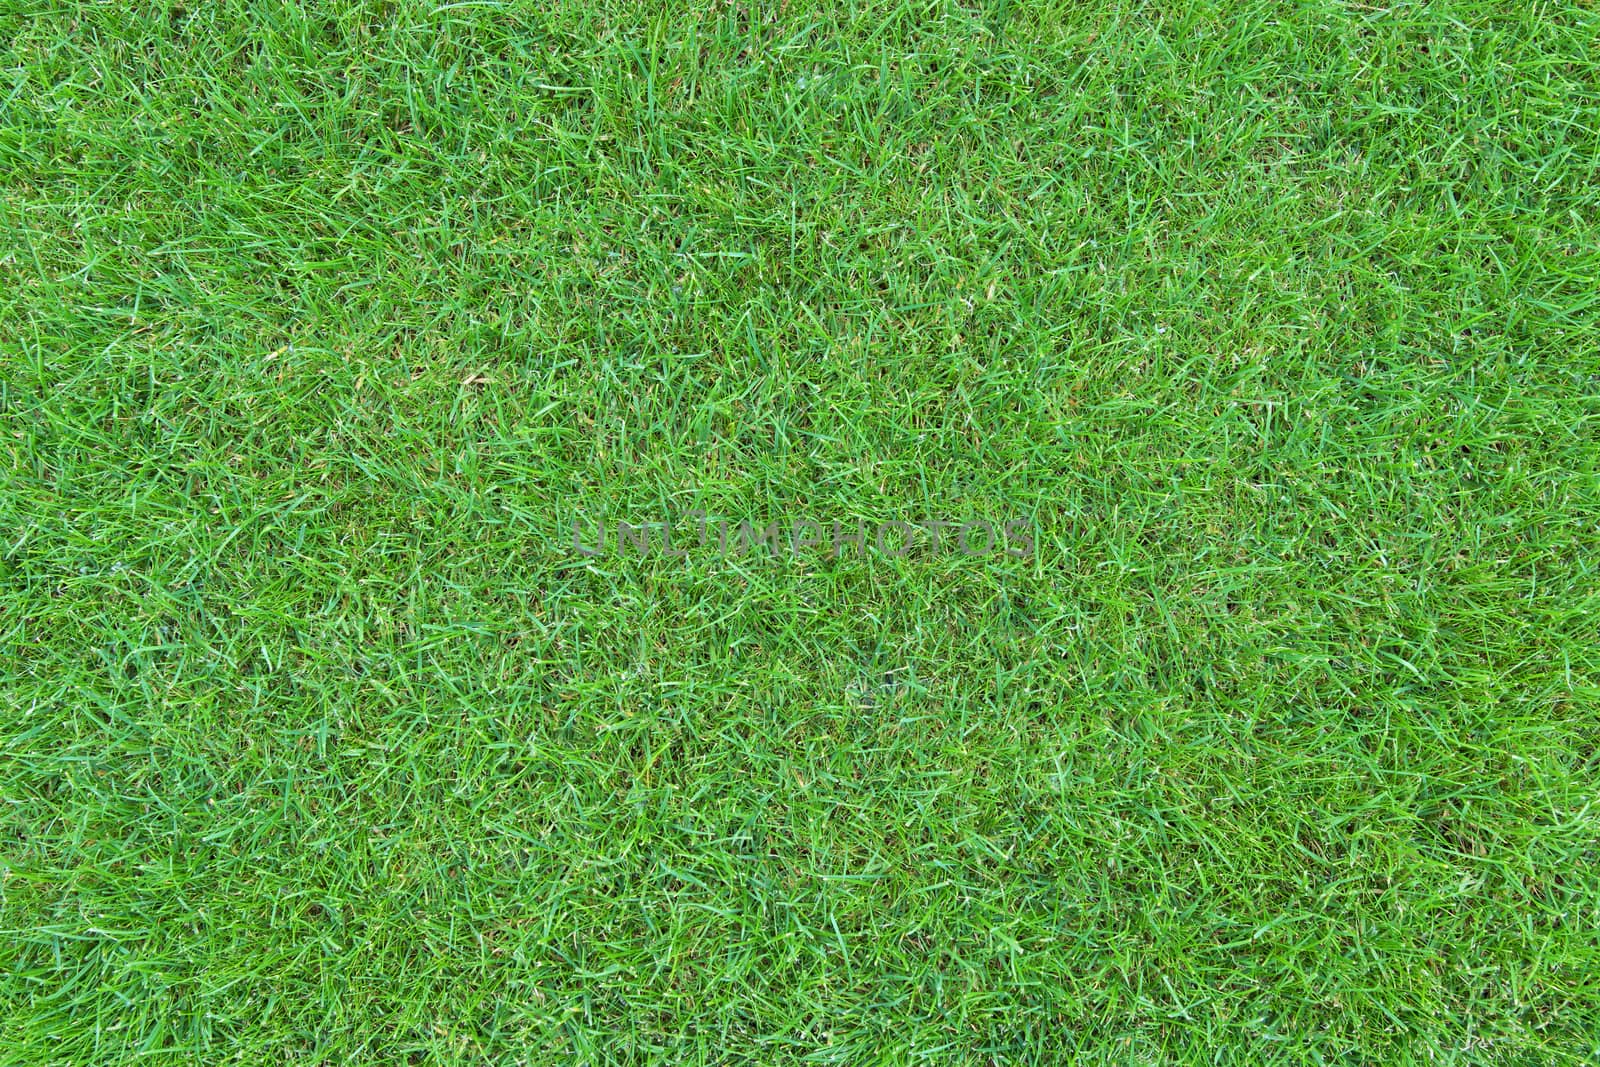 Green grass lawn top view